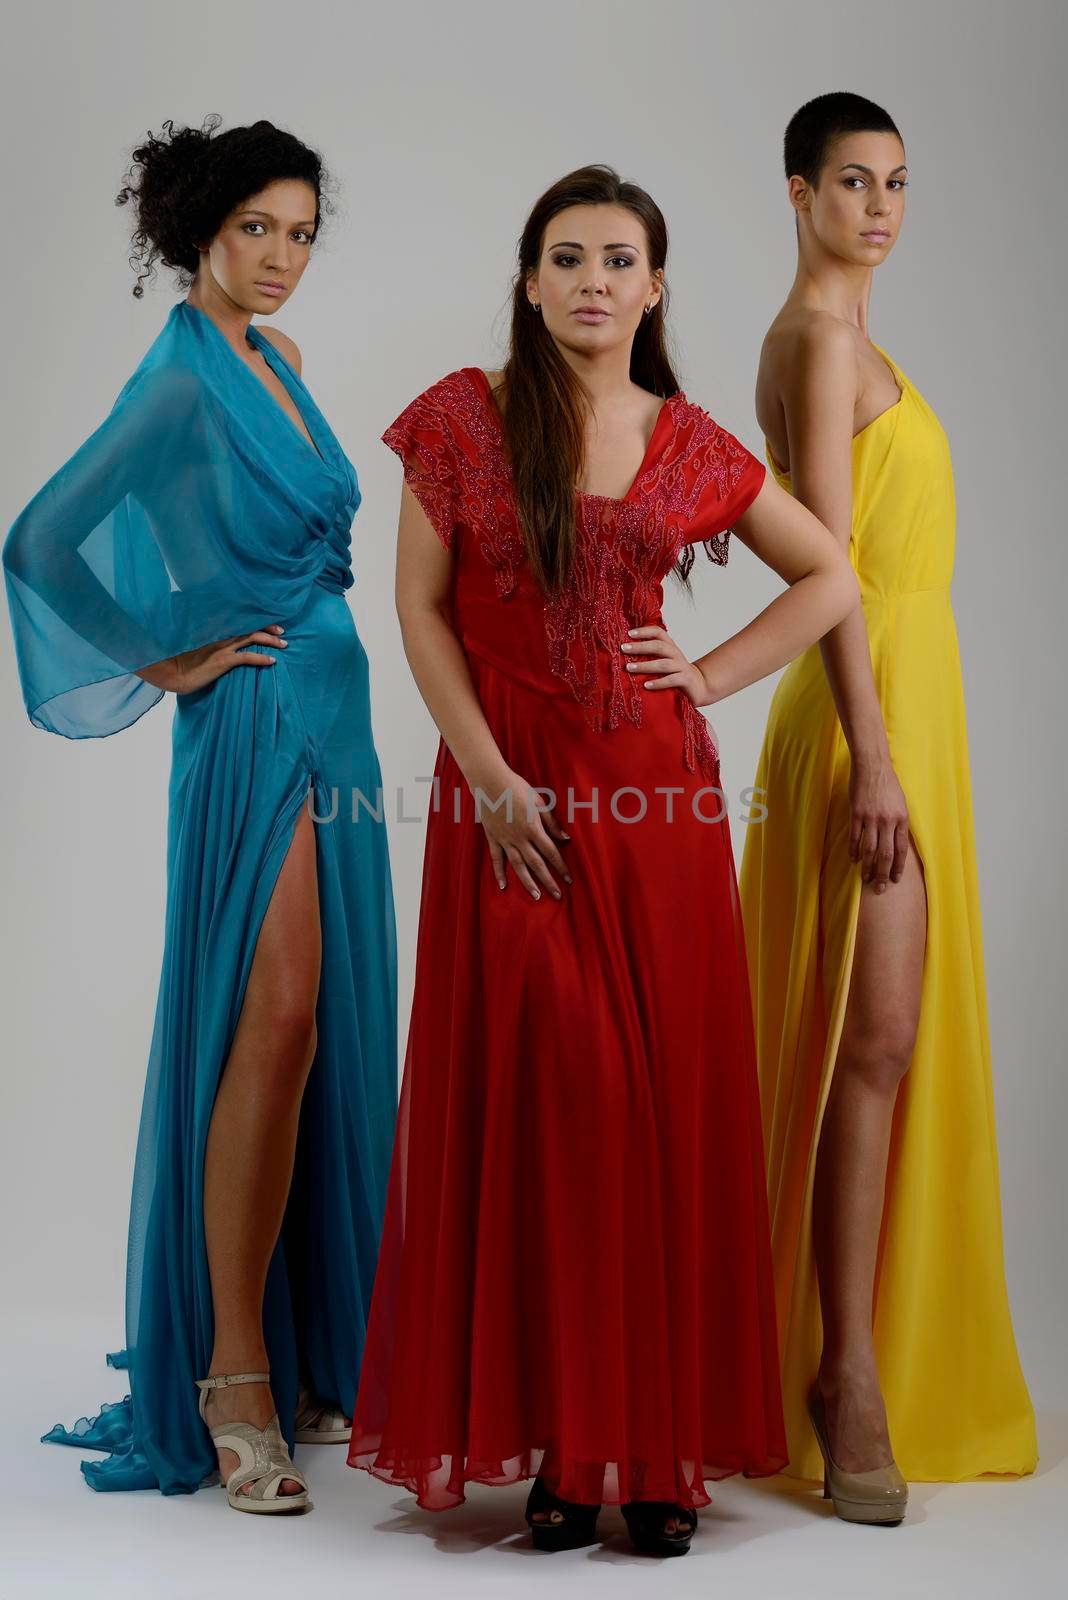 portrait of a three beautiful woman in wedding dress by dotshock